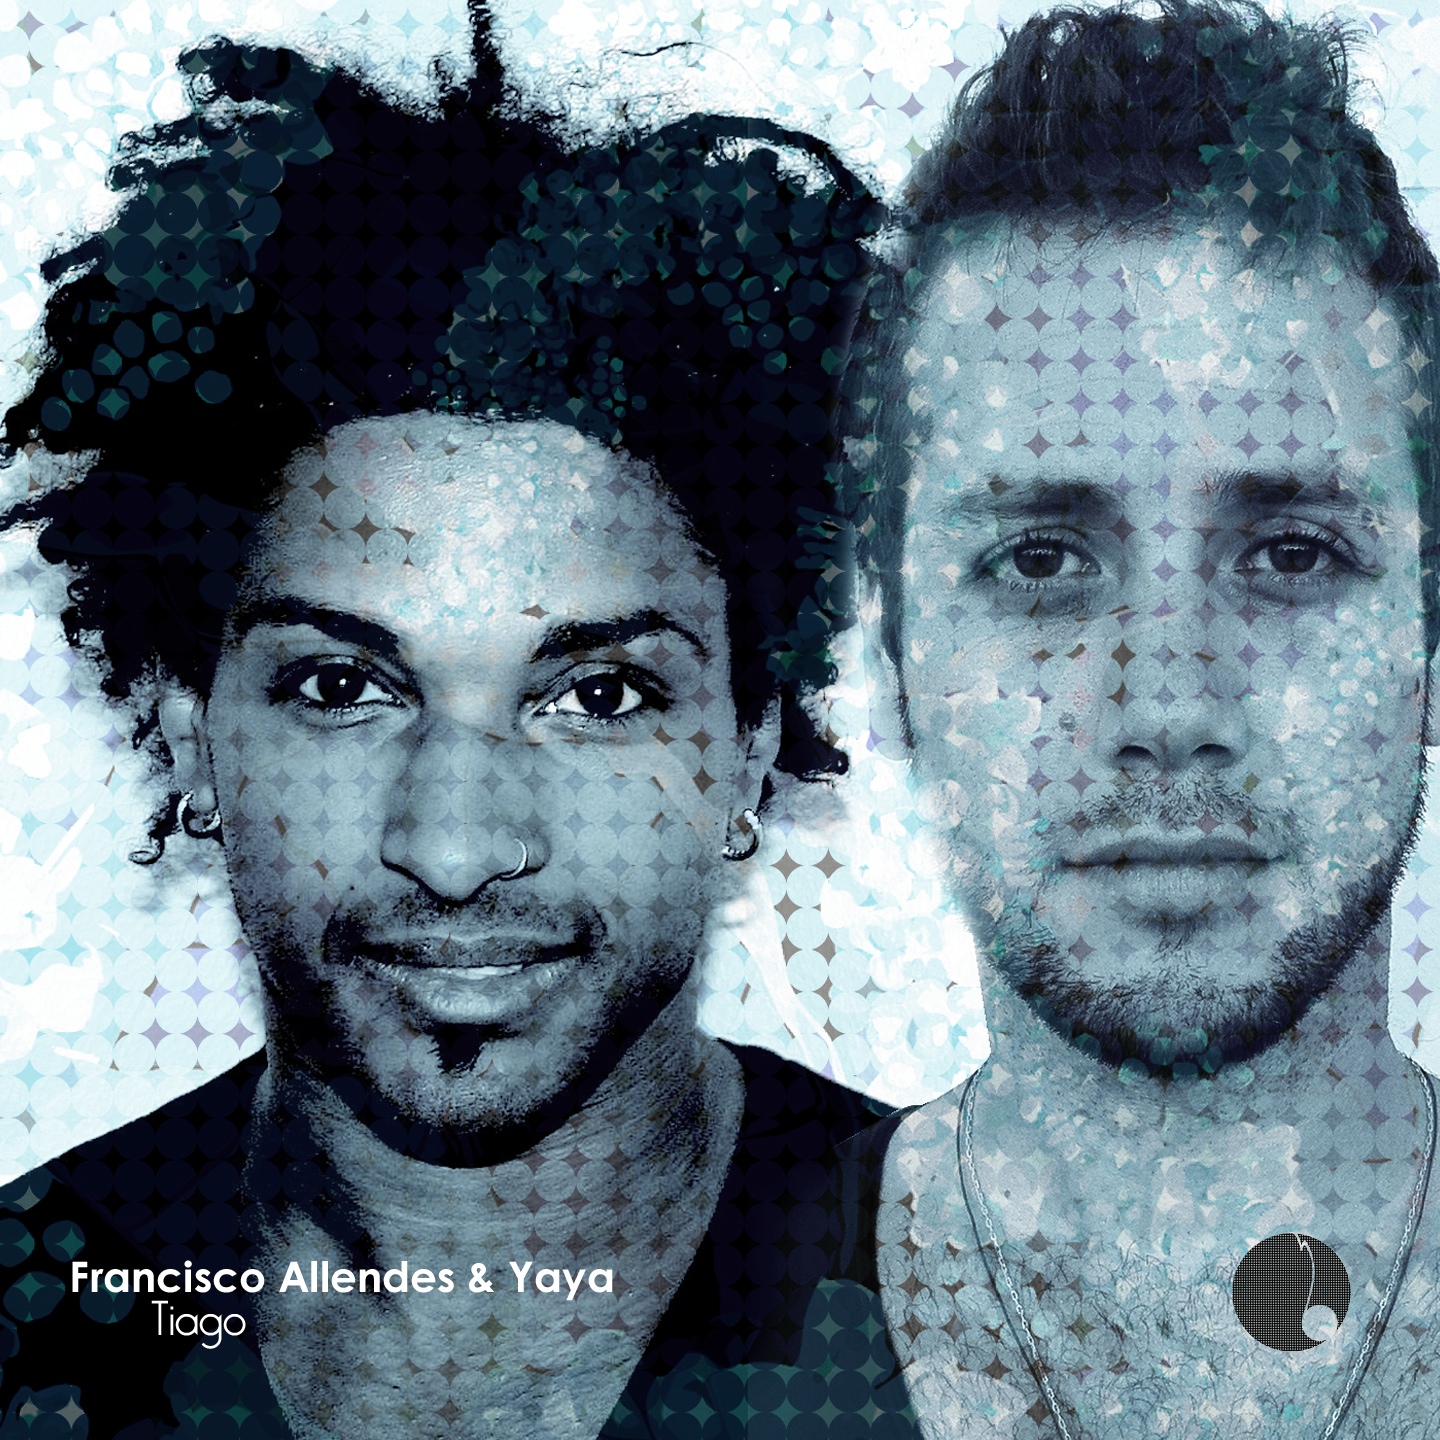 image cover: Francisco Allendes & Yaya - Tiago [CAL010]